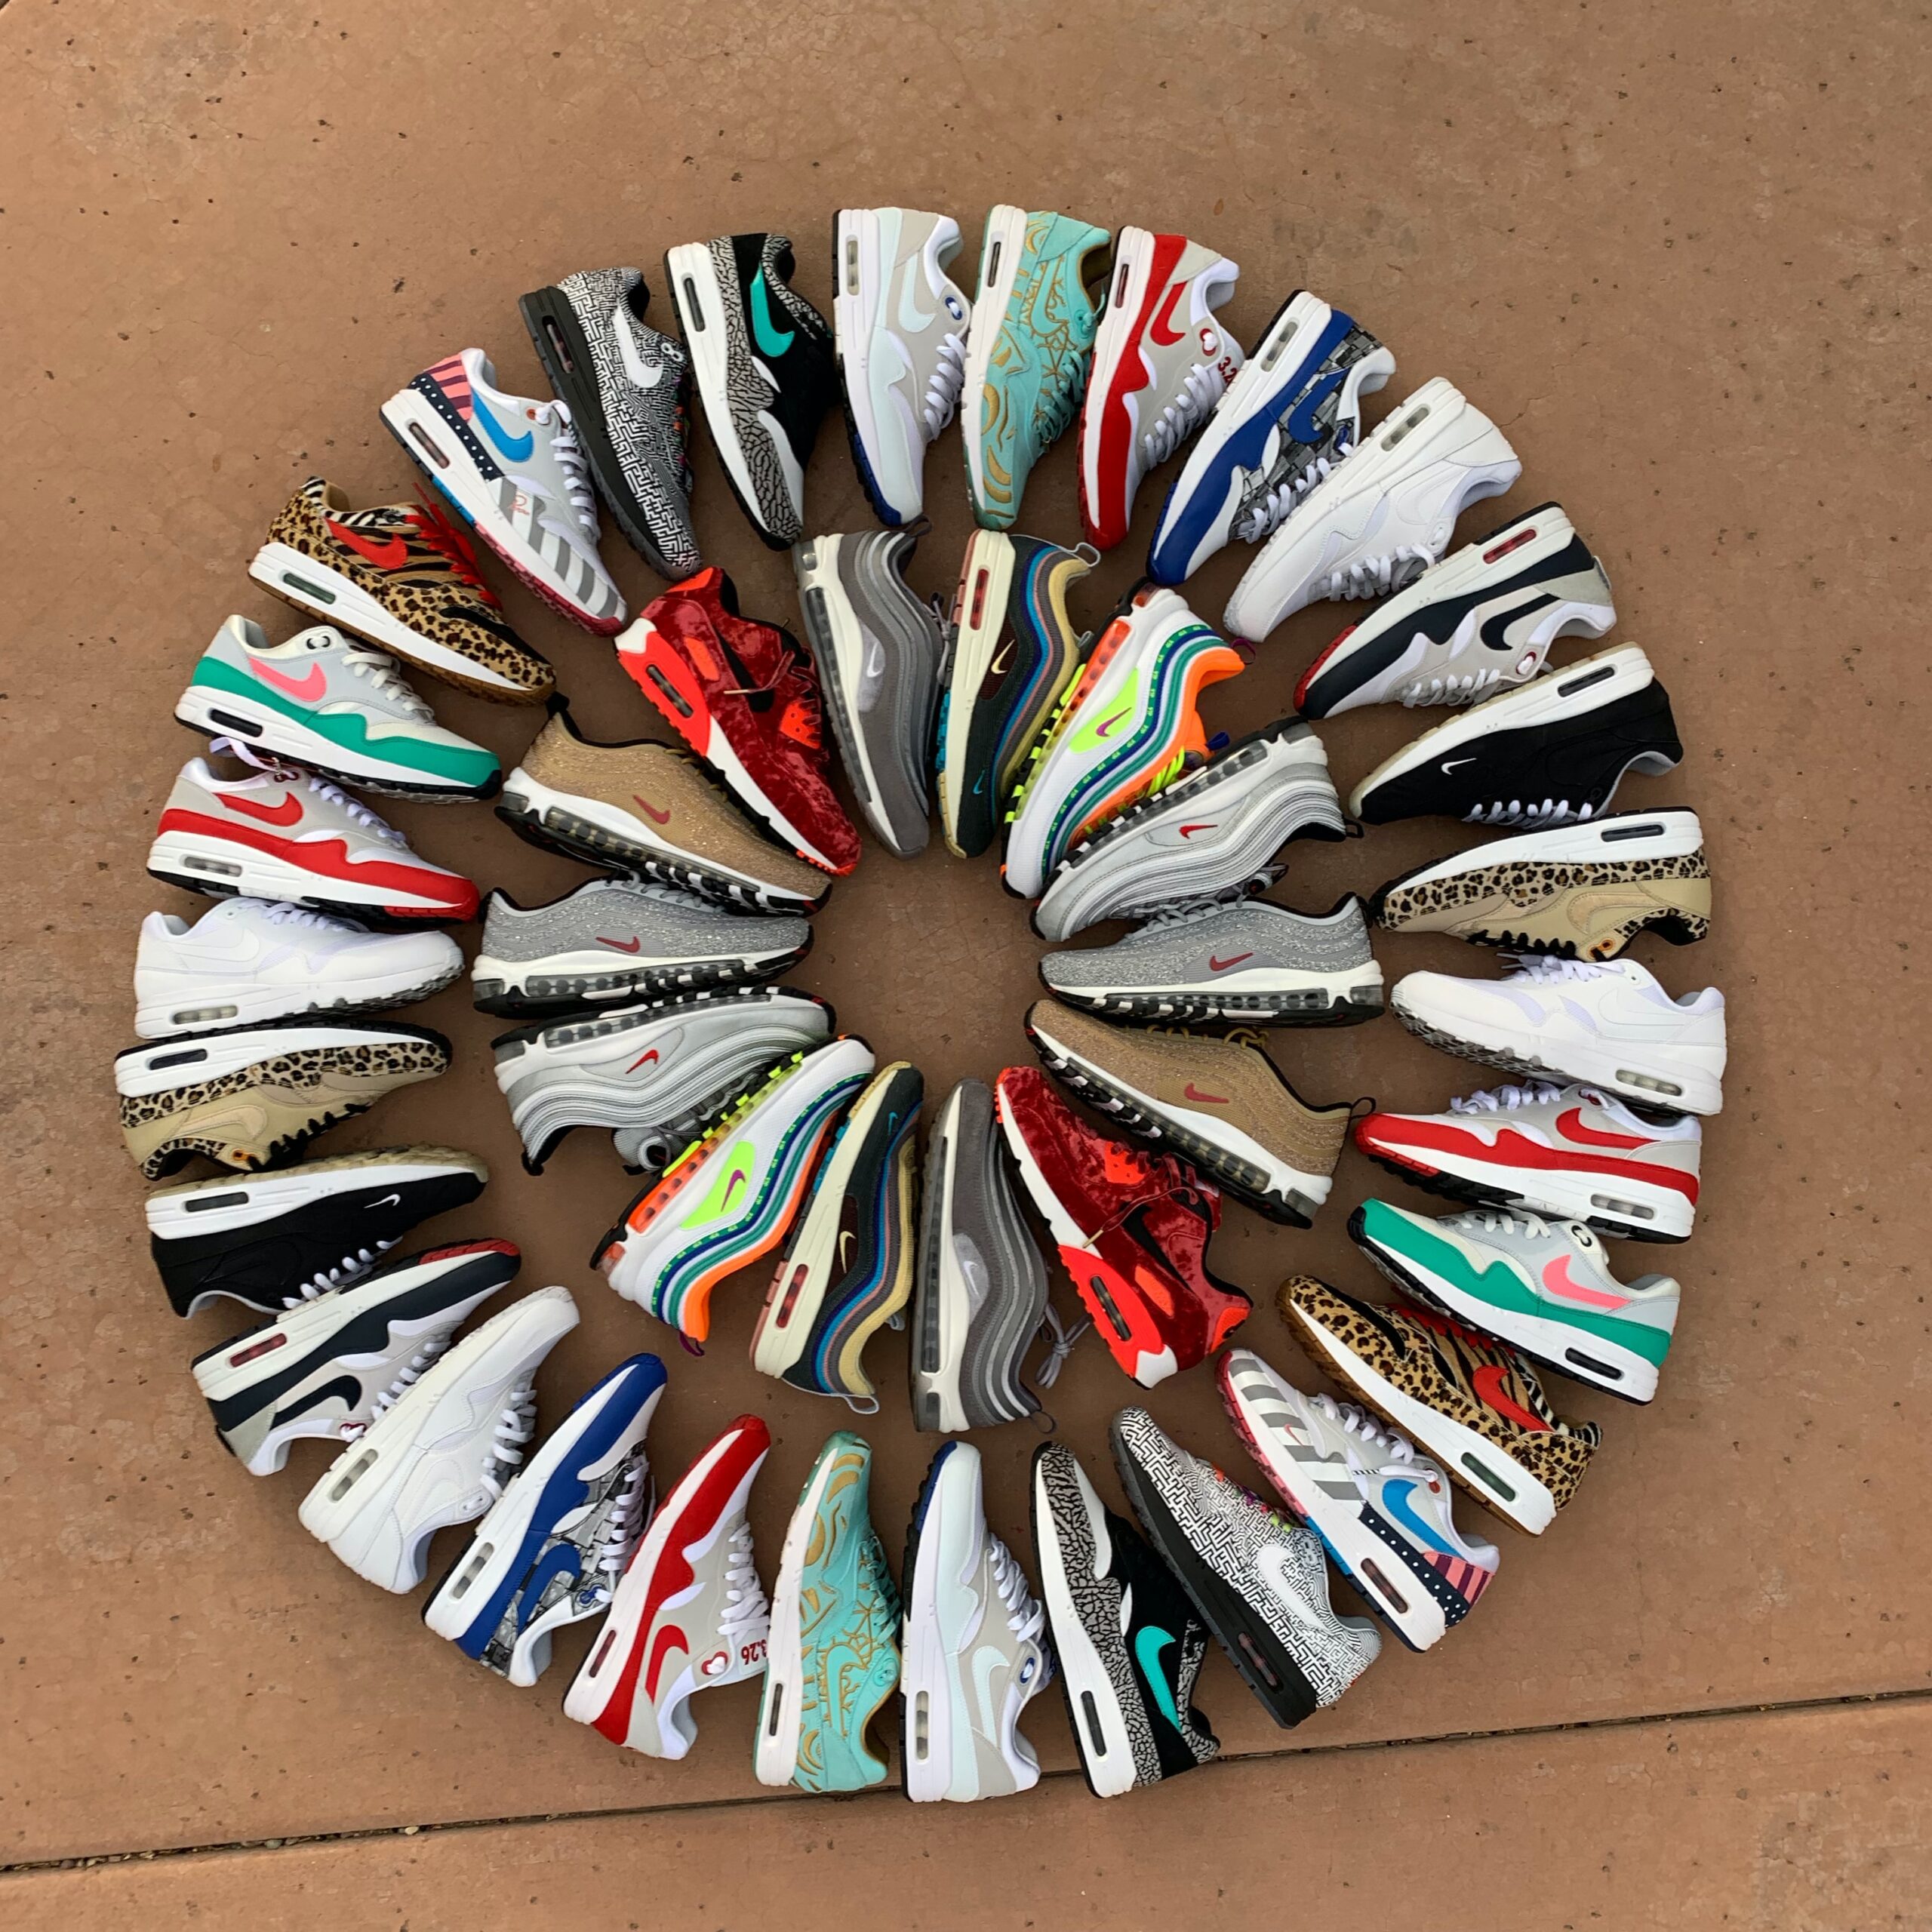 a circular arrangement of shoes on a tile floor.